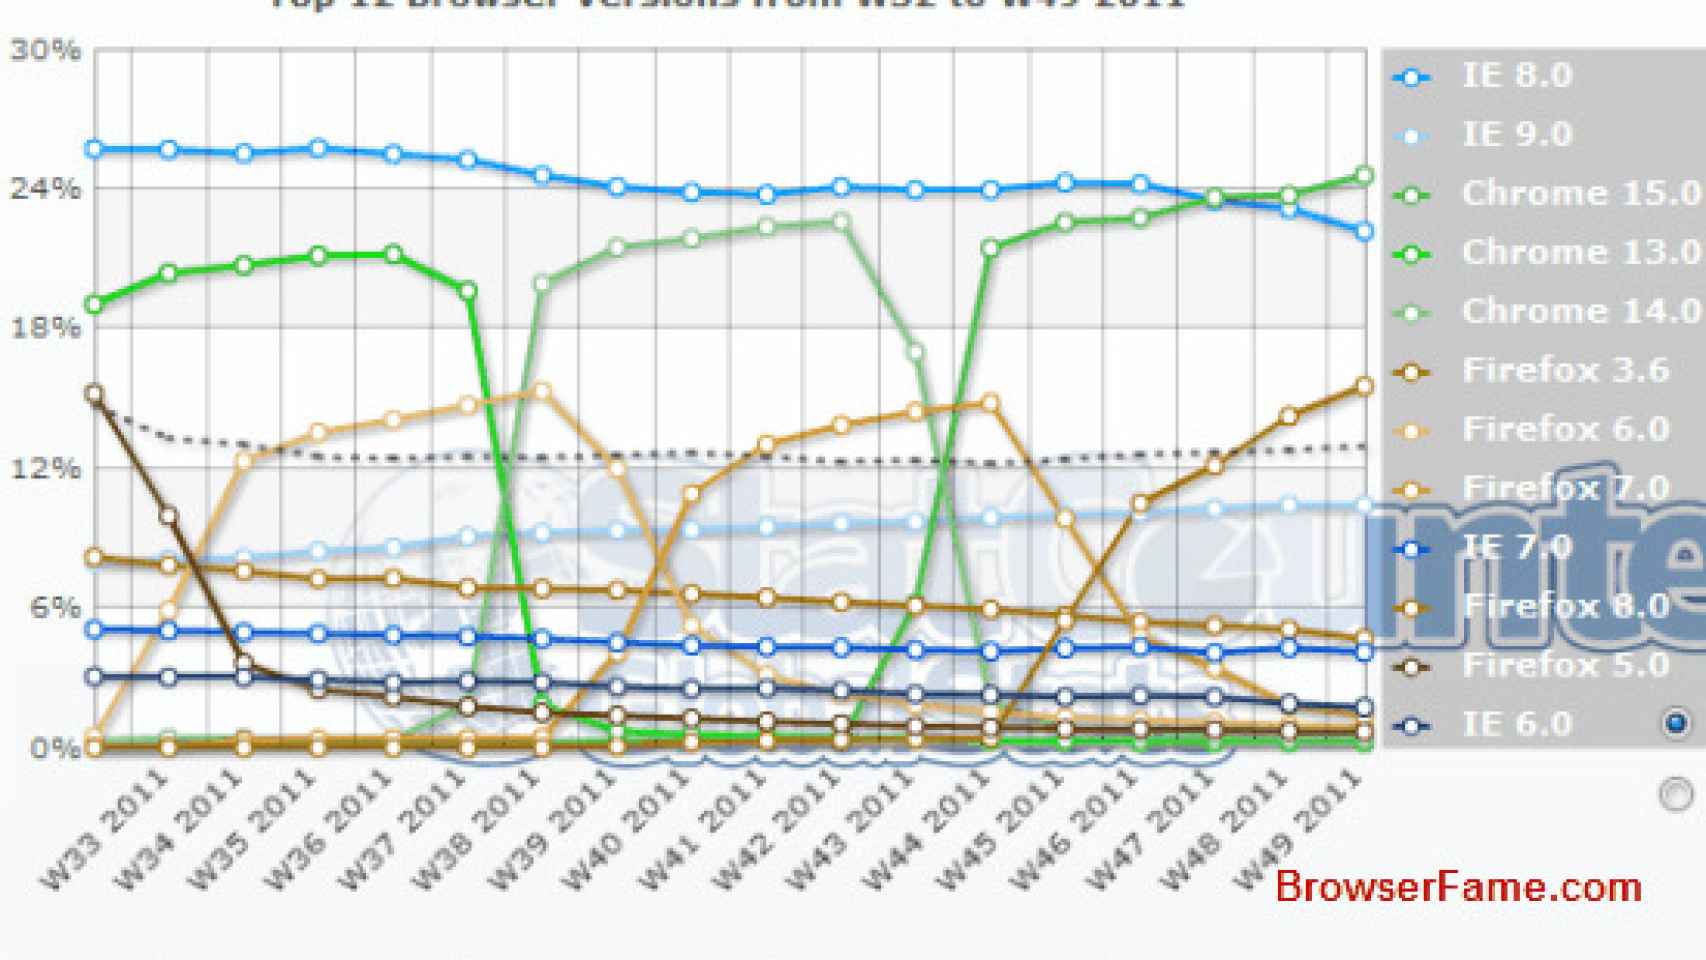 chrome15-top-browser-worldwide